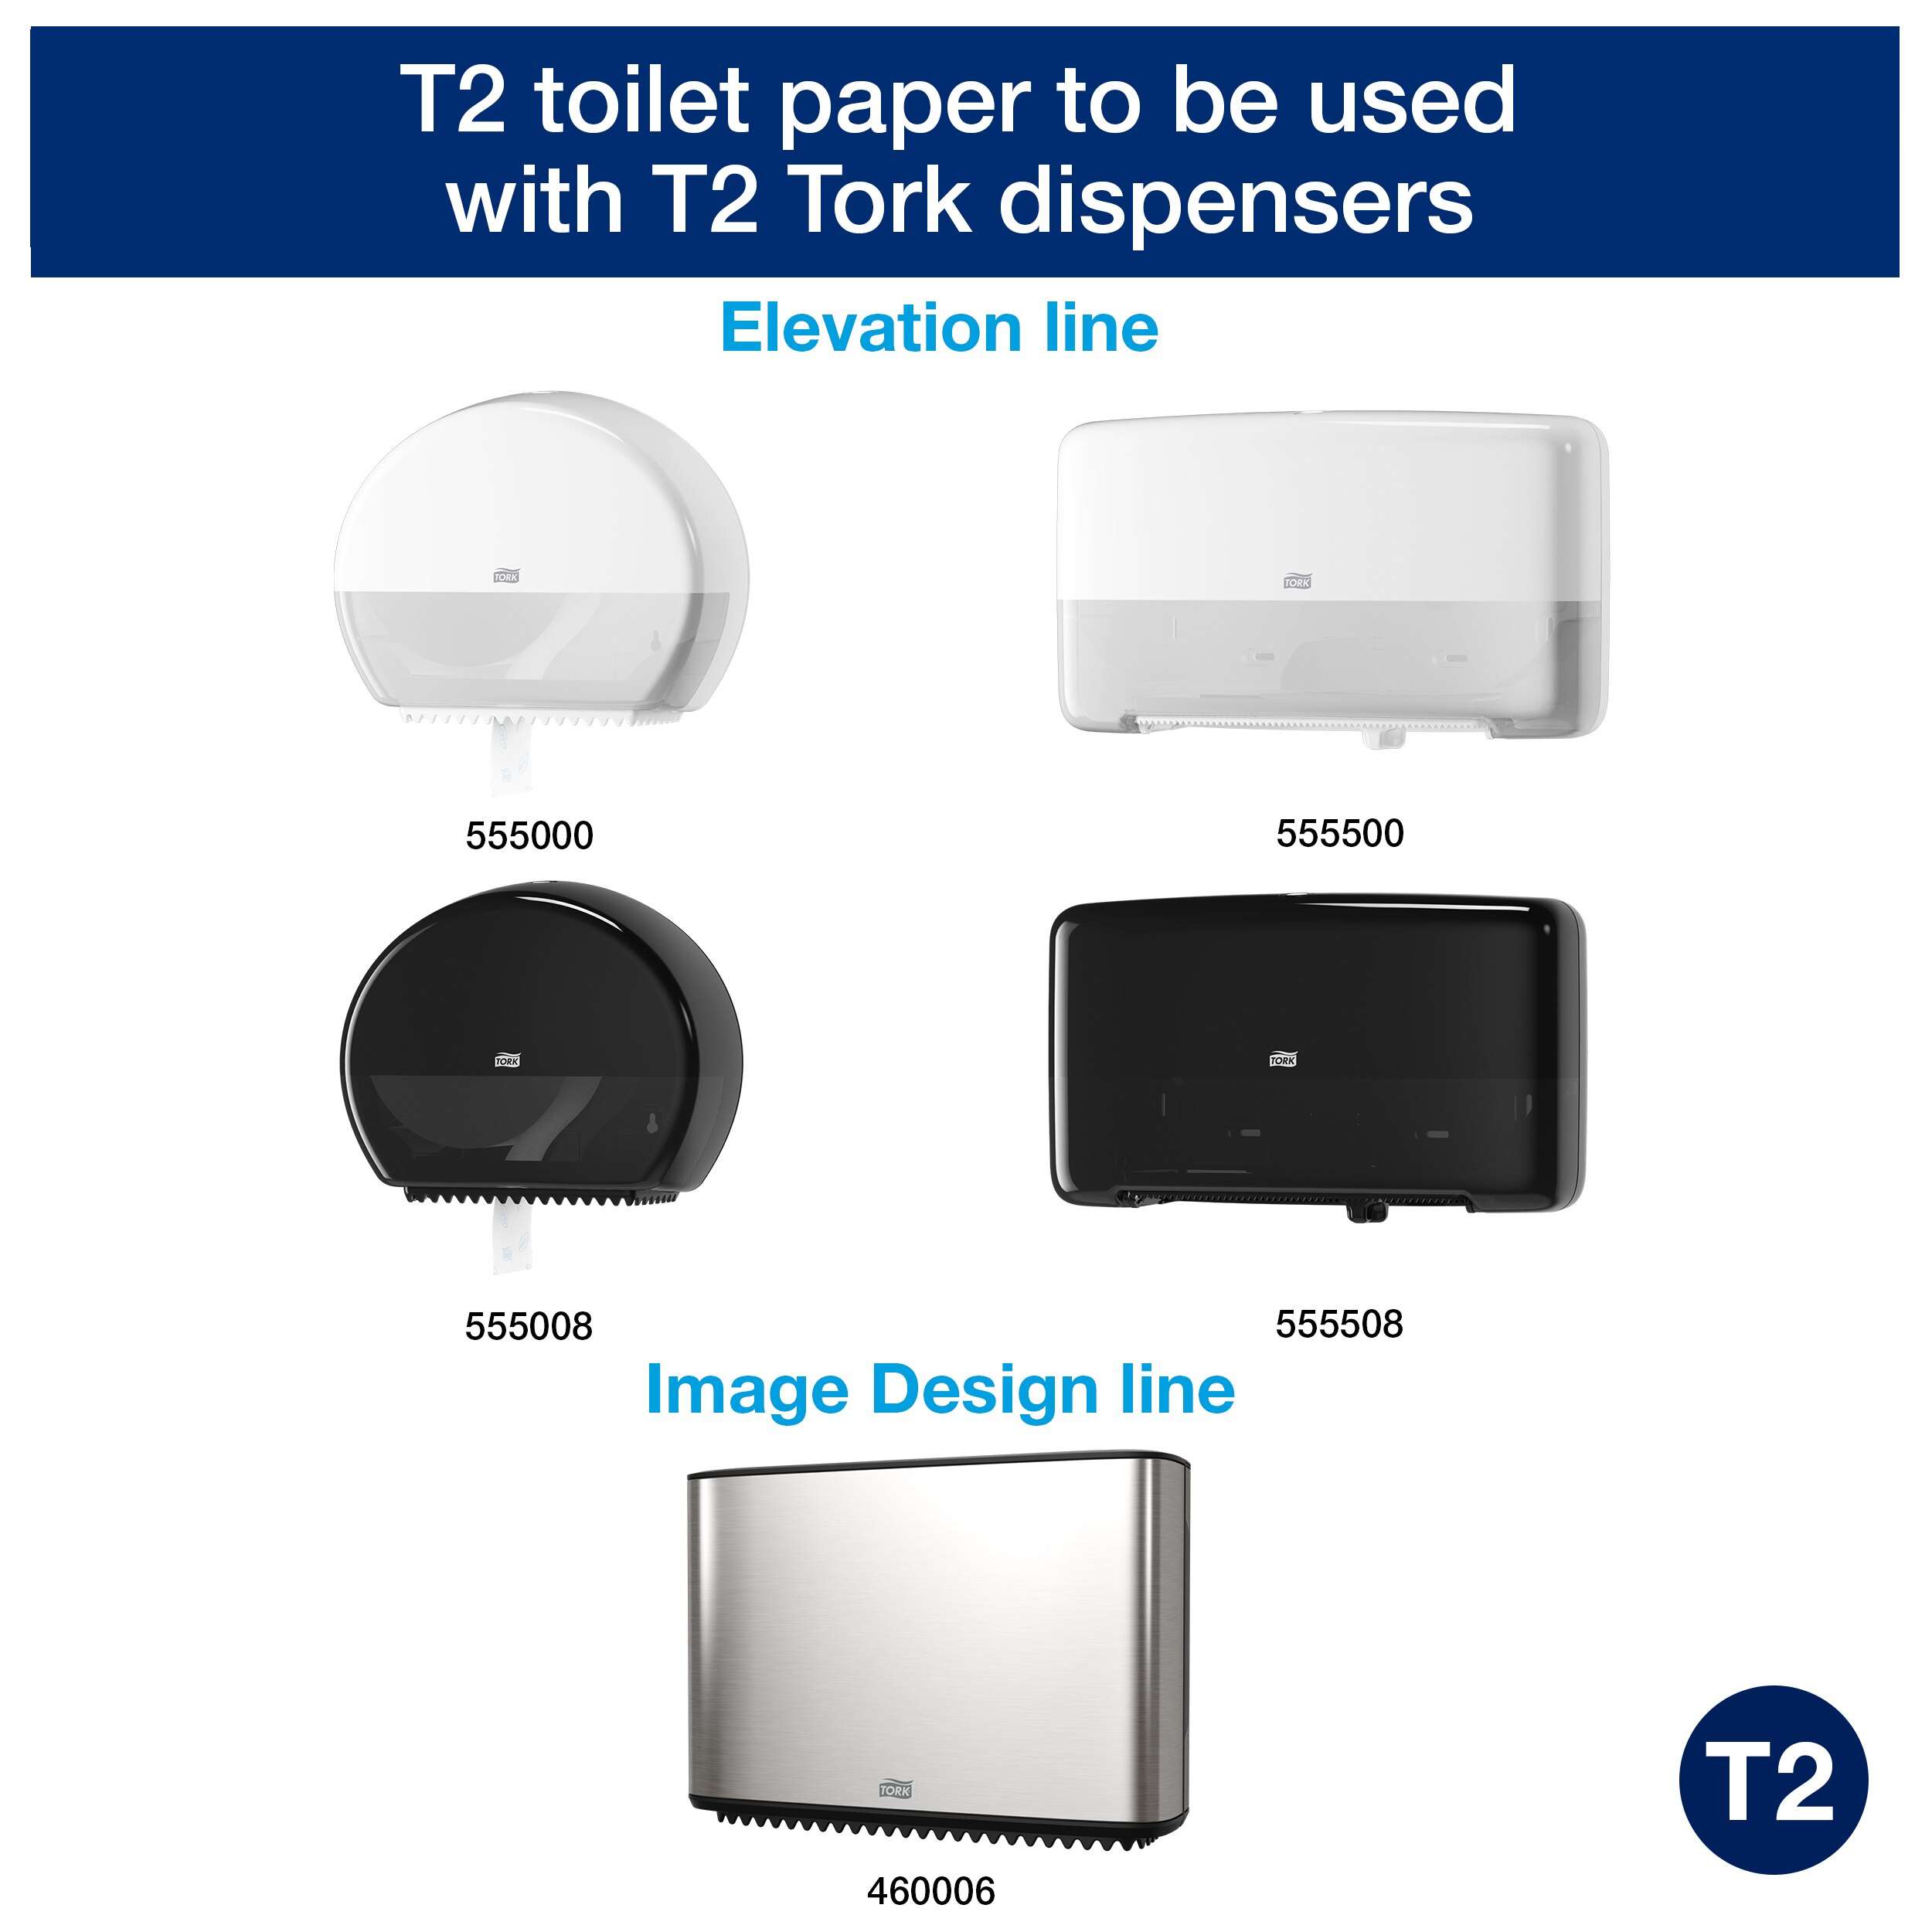 Tork Soft Mini Jumbo Toilet Paper Roll White T2